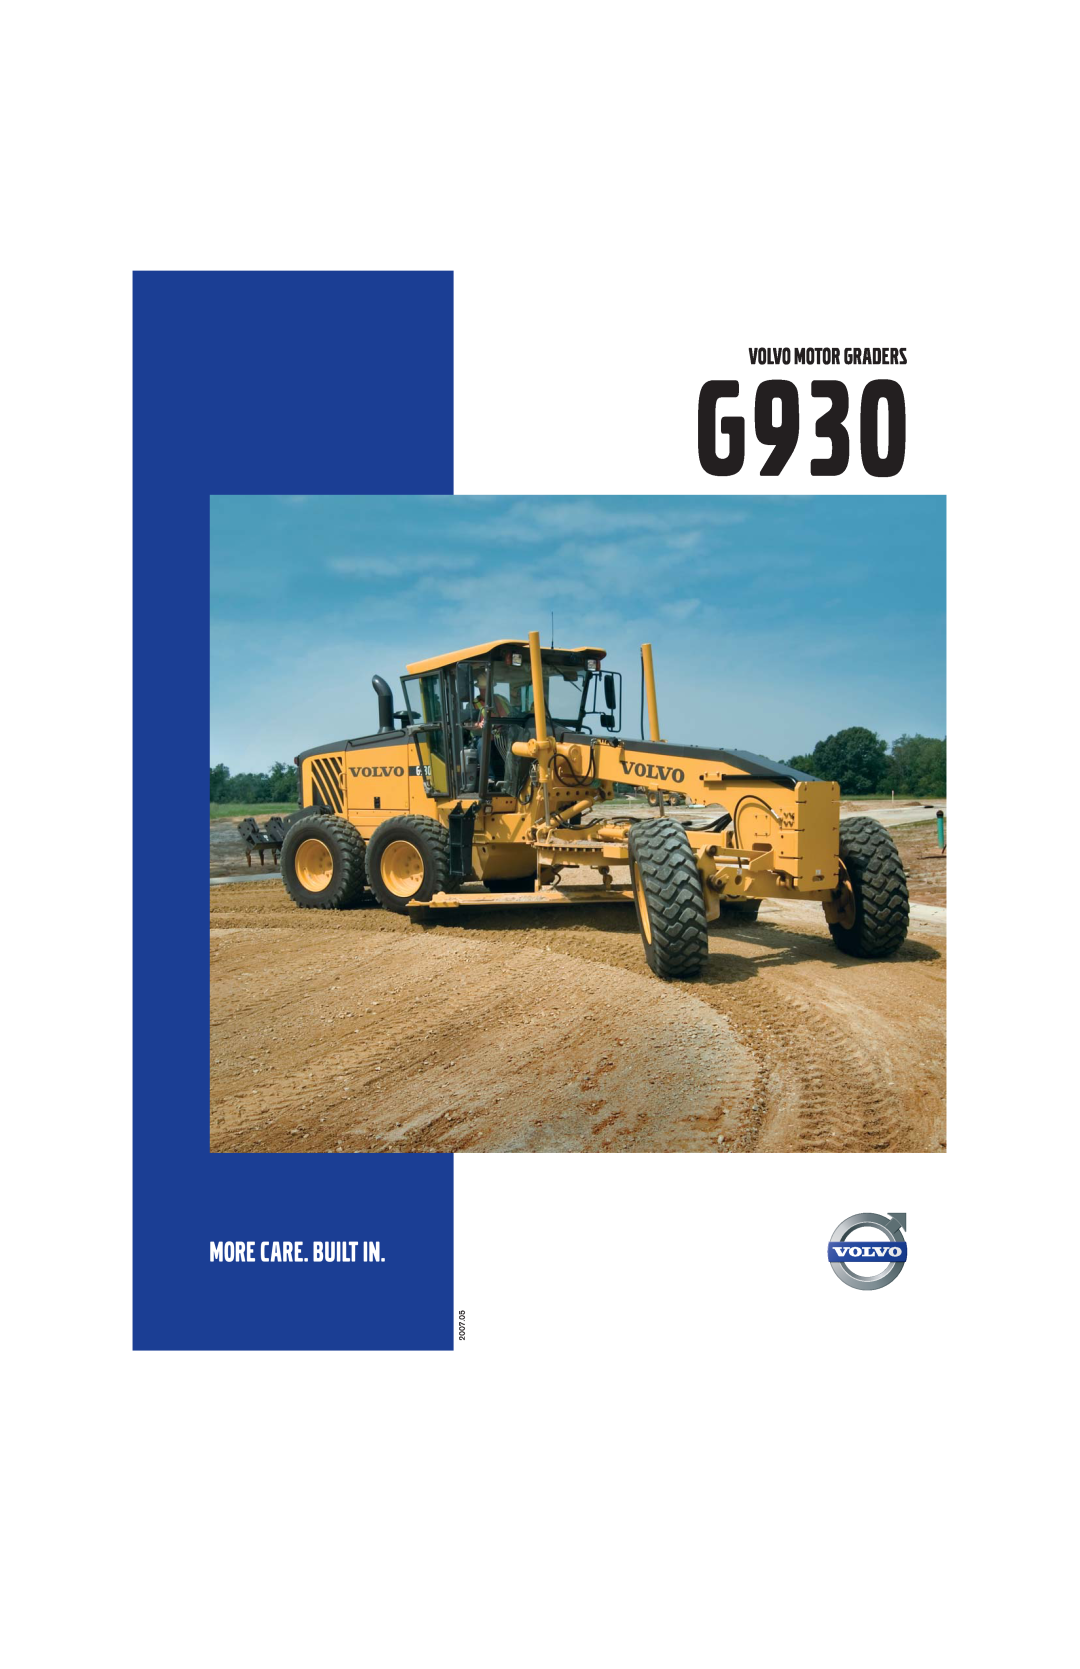 Volvo G930 manual More Care. Built In, Volvo Motor Graders 